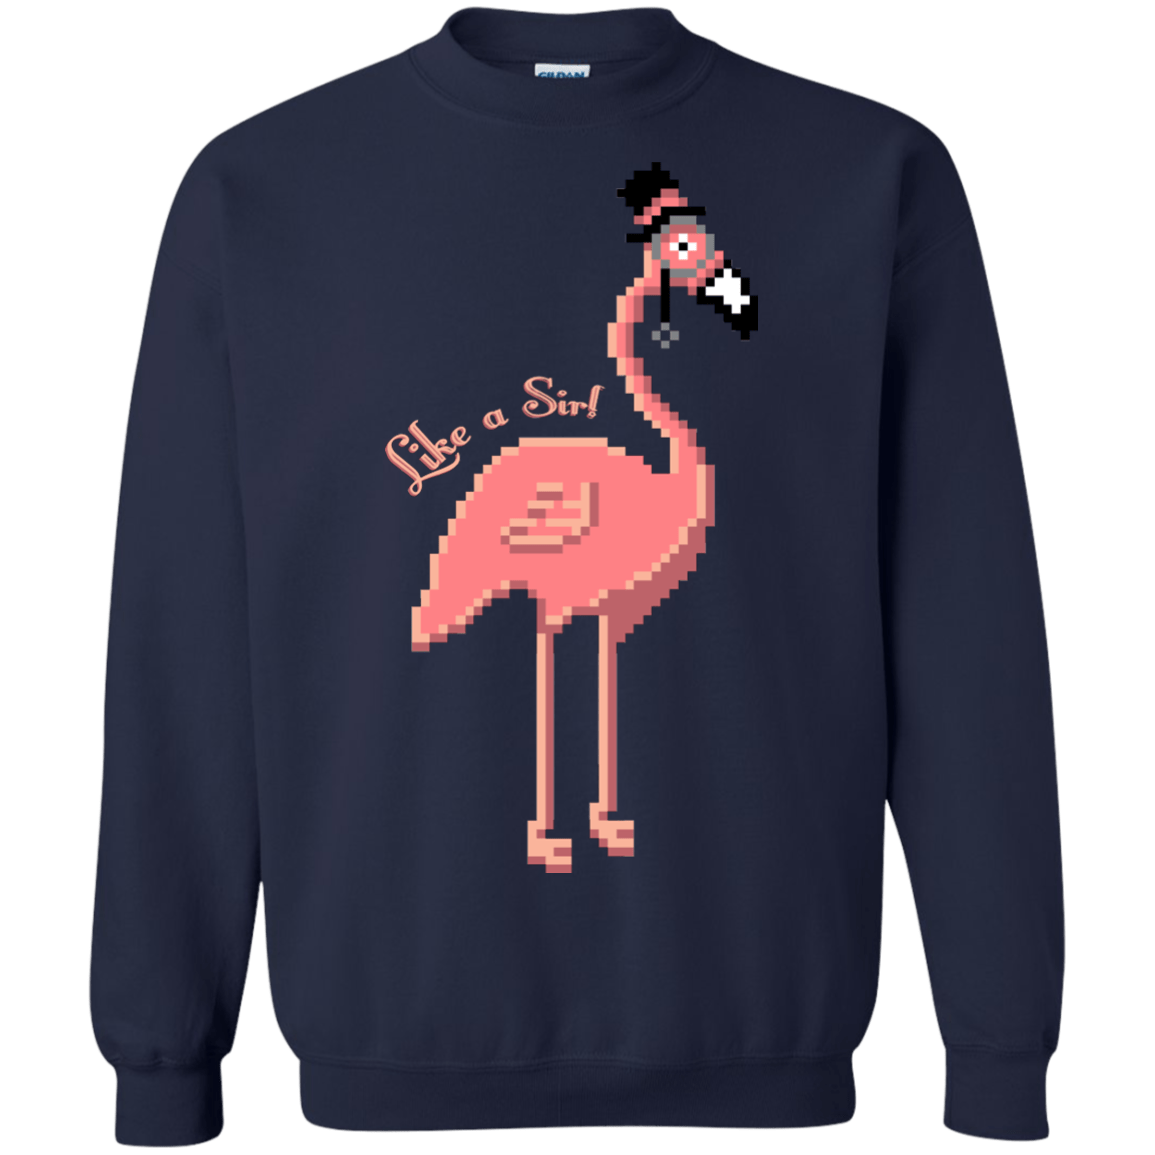 Sweatshirts Navy / S LikeASir Flamingo Crewneck Sweatshirt